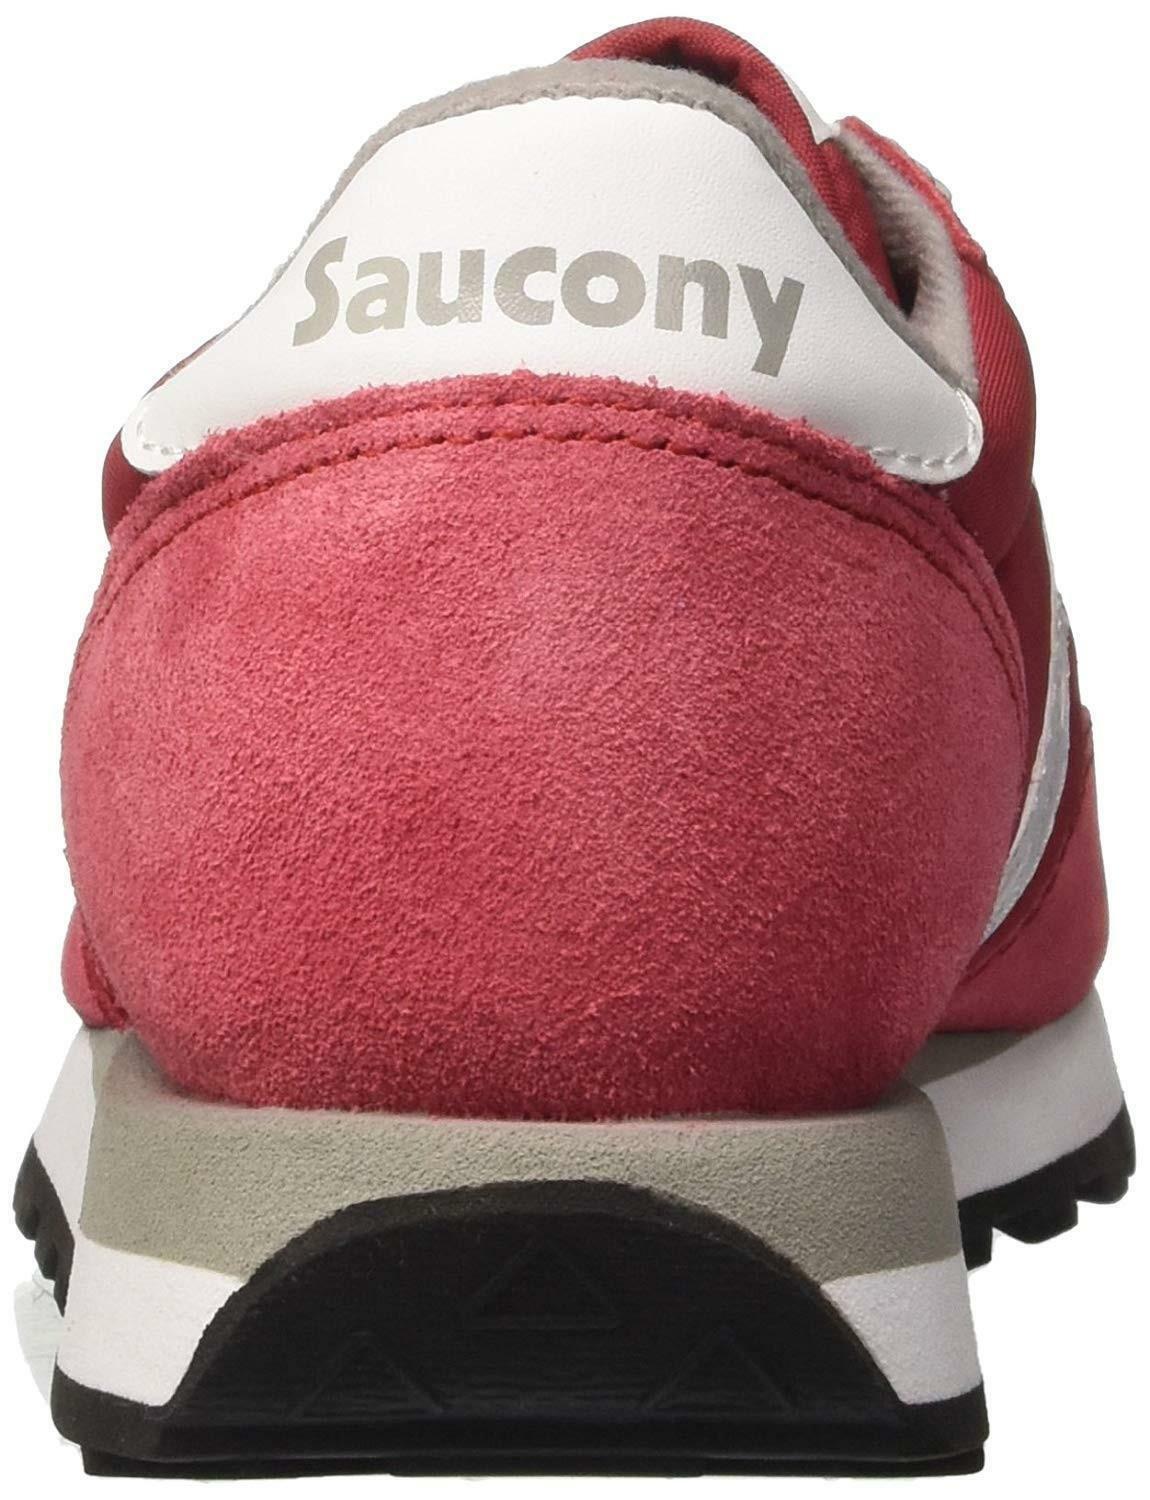 saucony saucony jazz original scarpe sportive uomo rosse s2044311